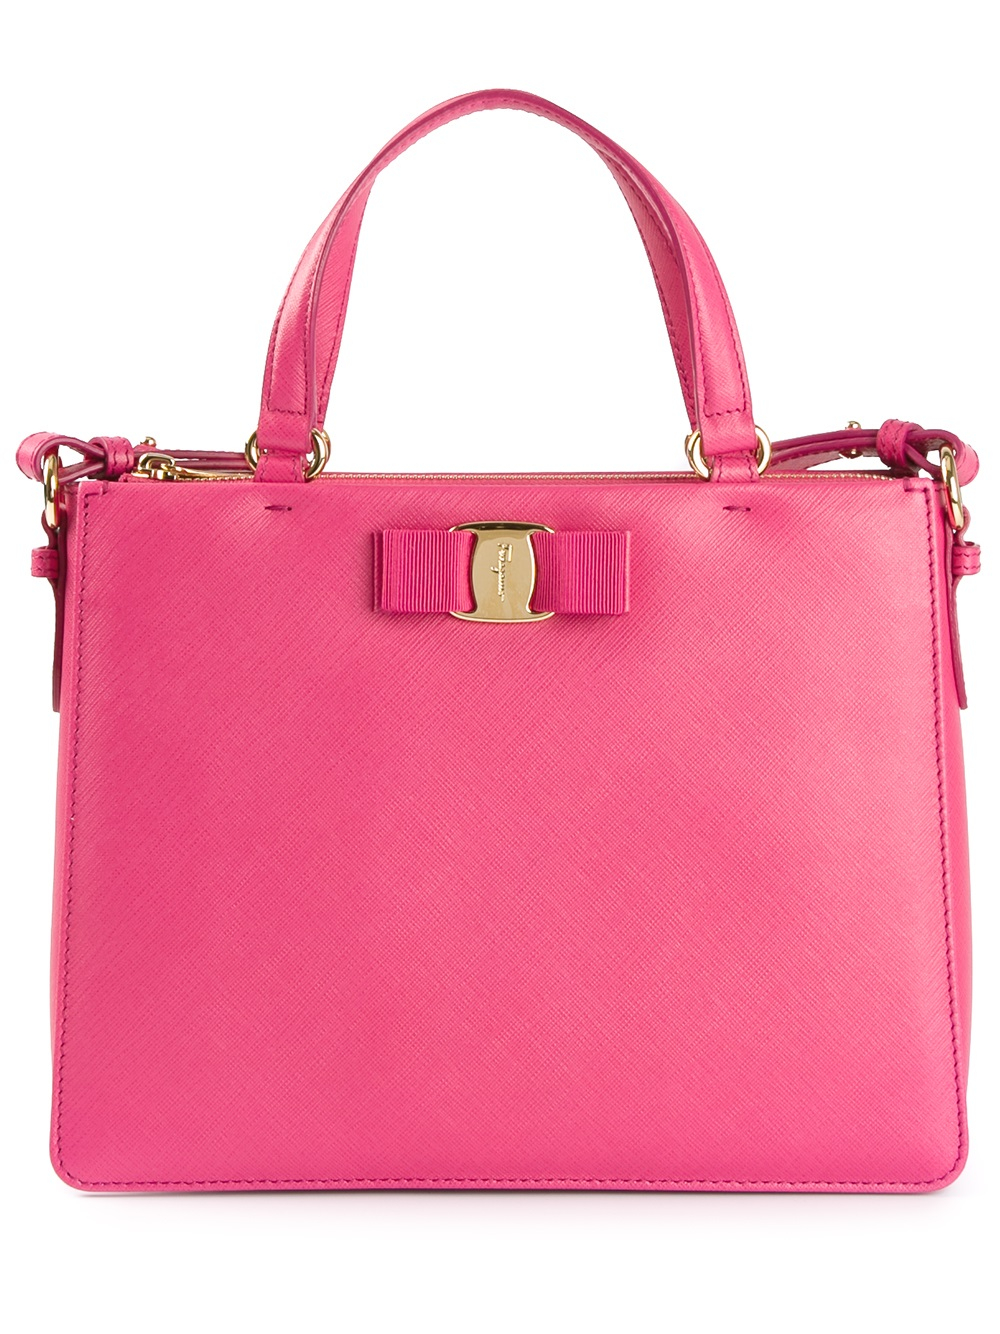 Ferragamo Tote Bag in Pink & Purple (Pink) - Lyst